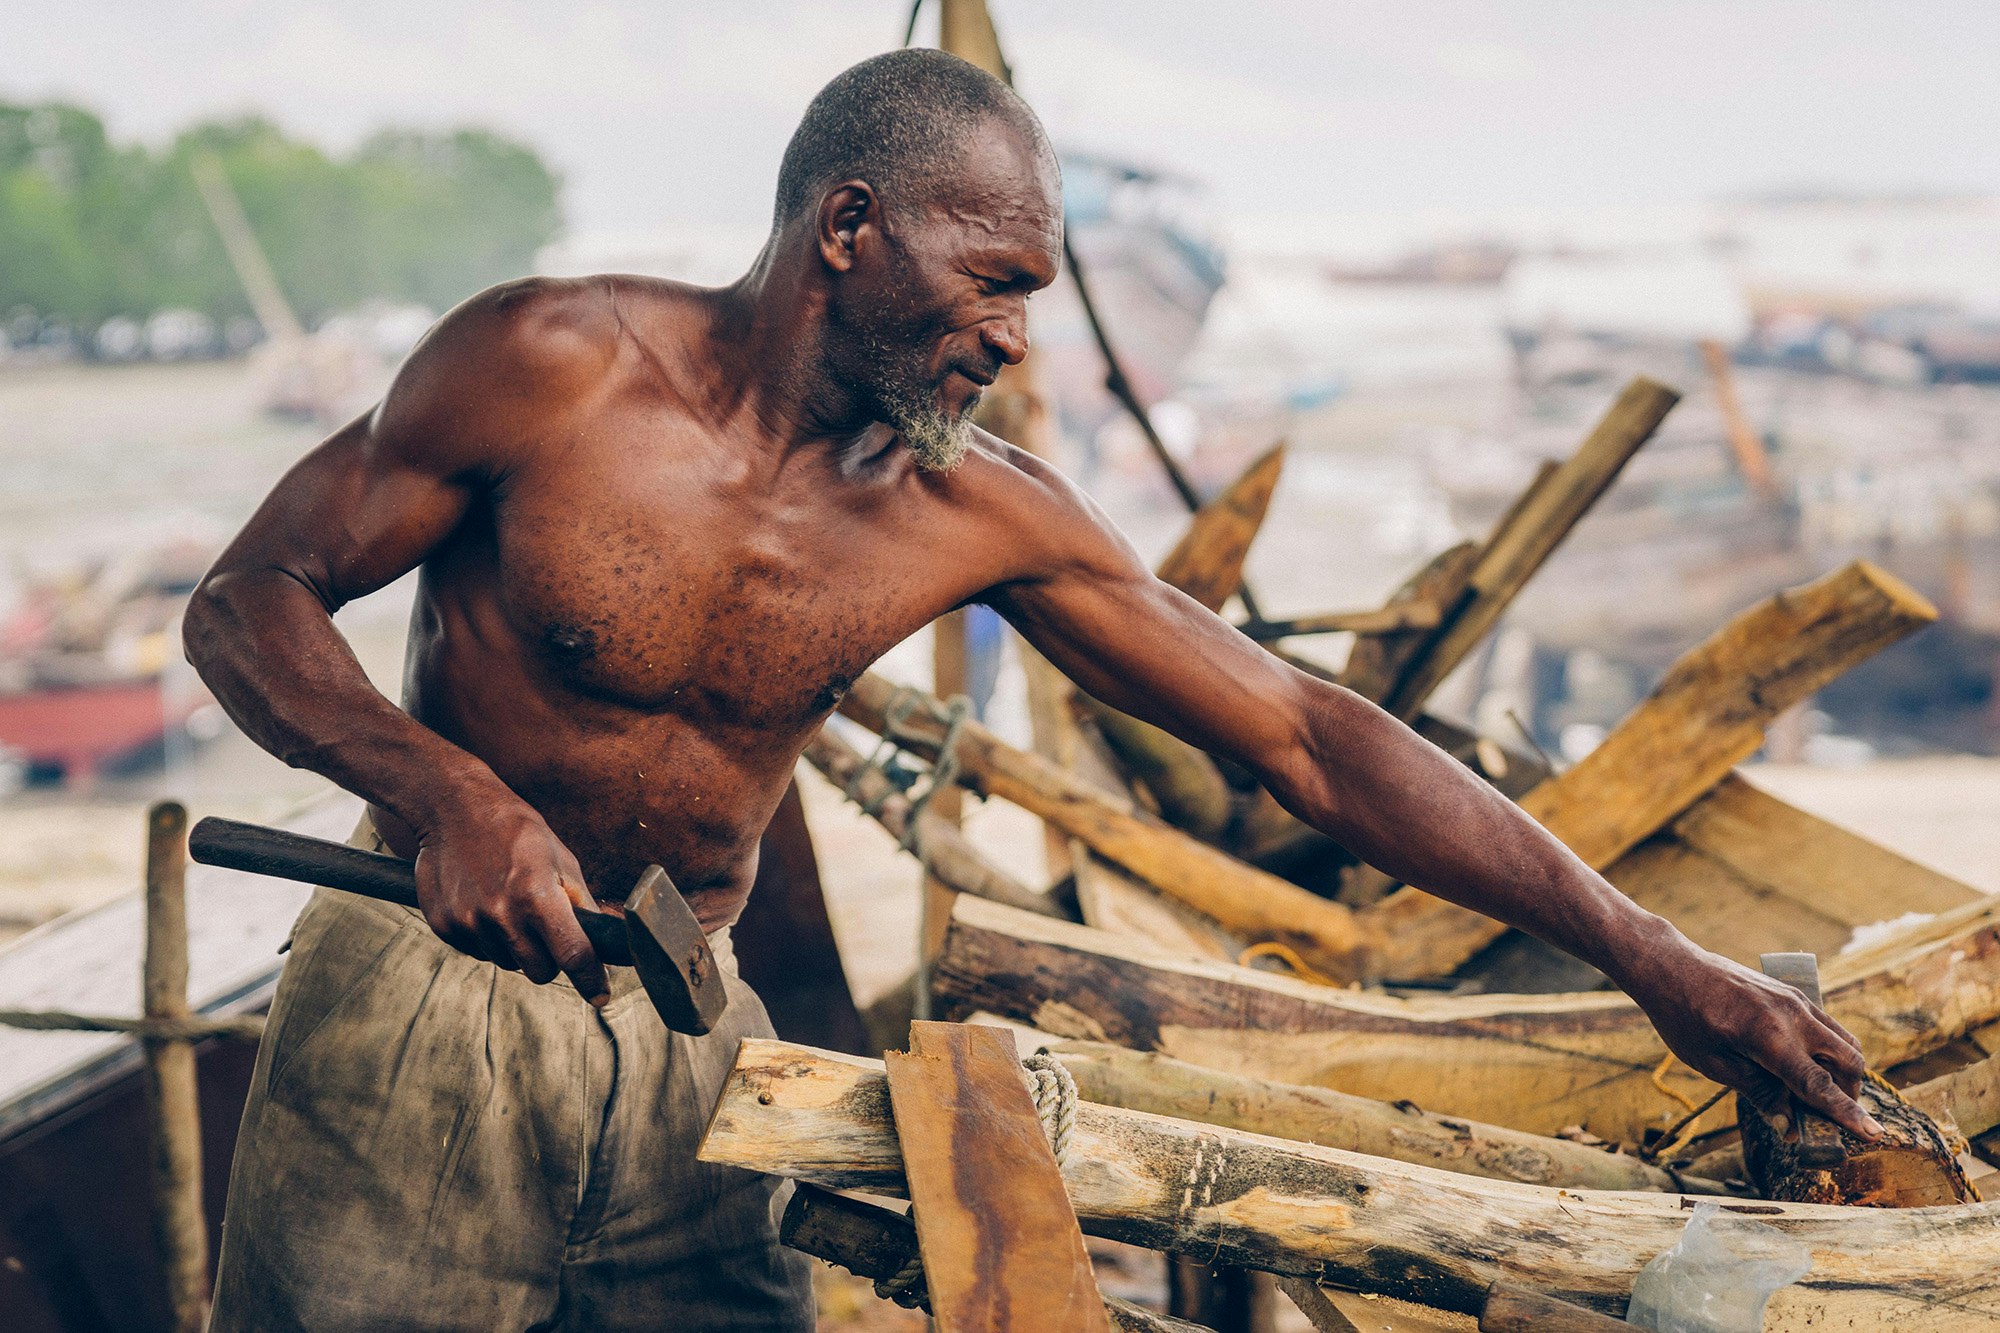 A traditional boat builder in Zanzibar